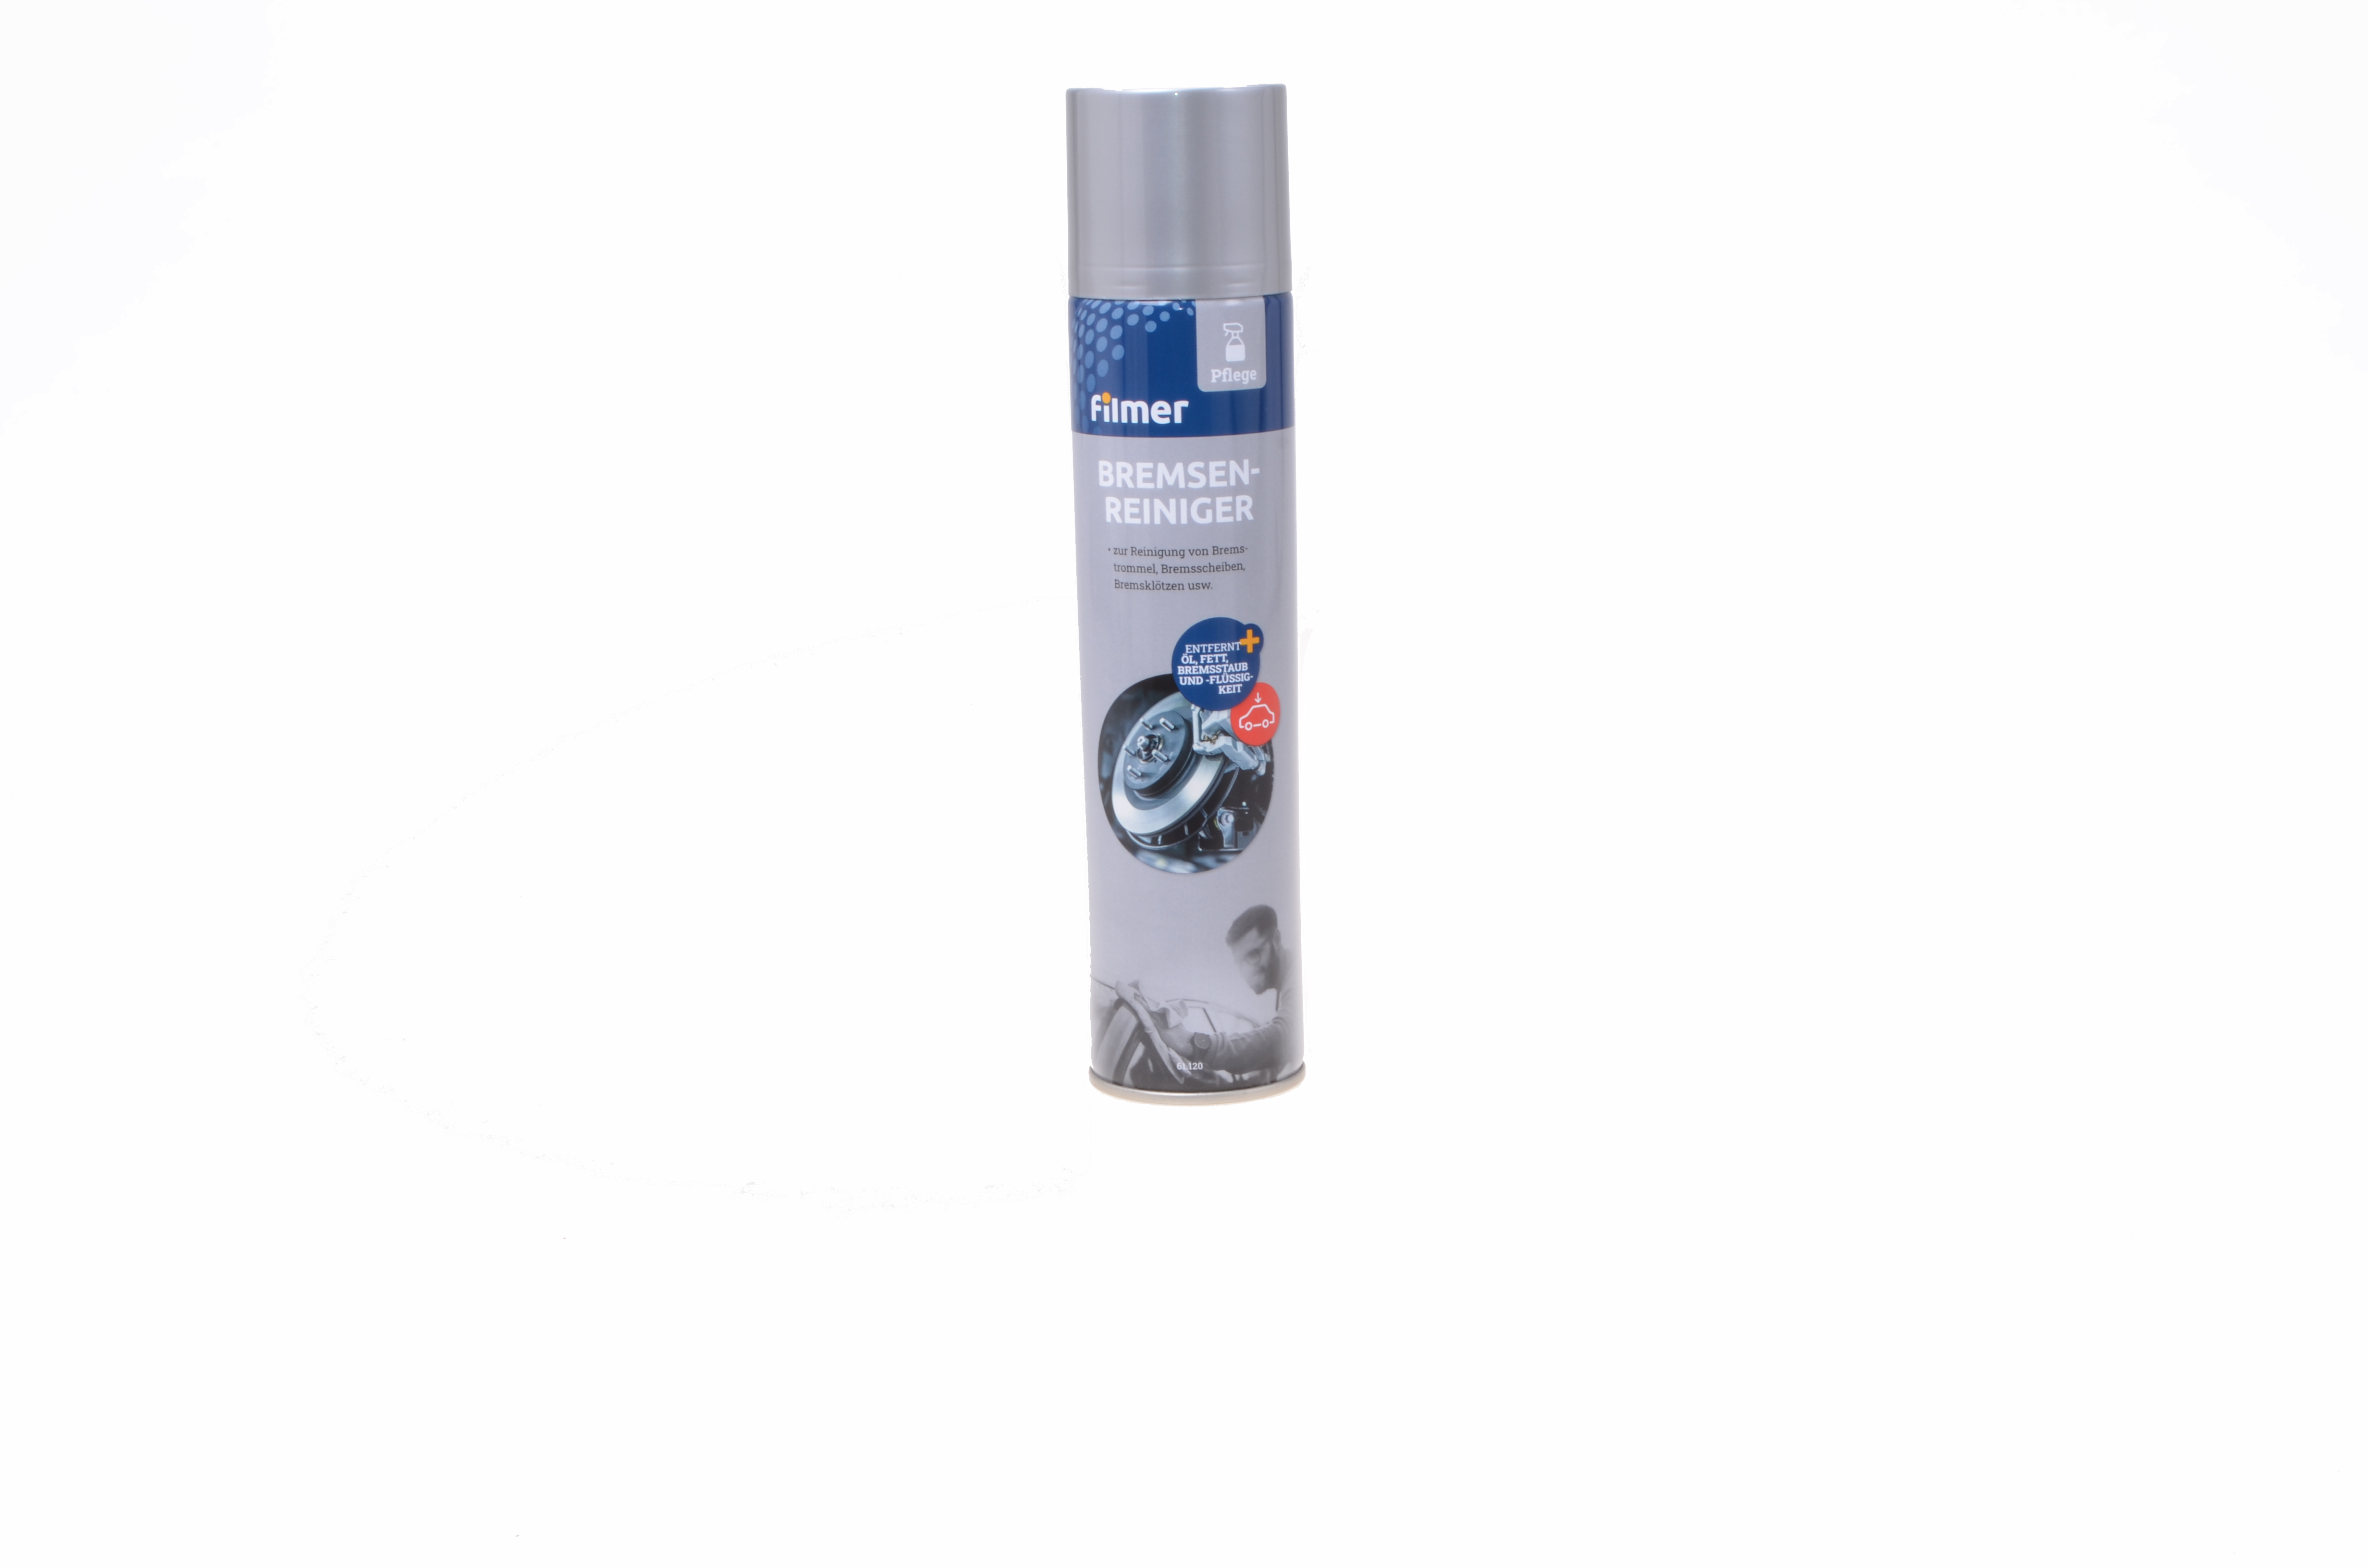 Bremsenreiniger-Spray 300 ml Begr. Menge gem. Kap. 3.4